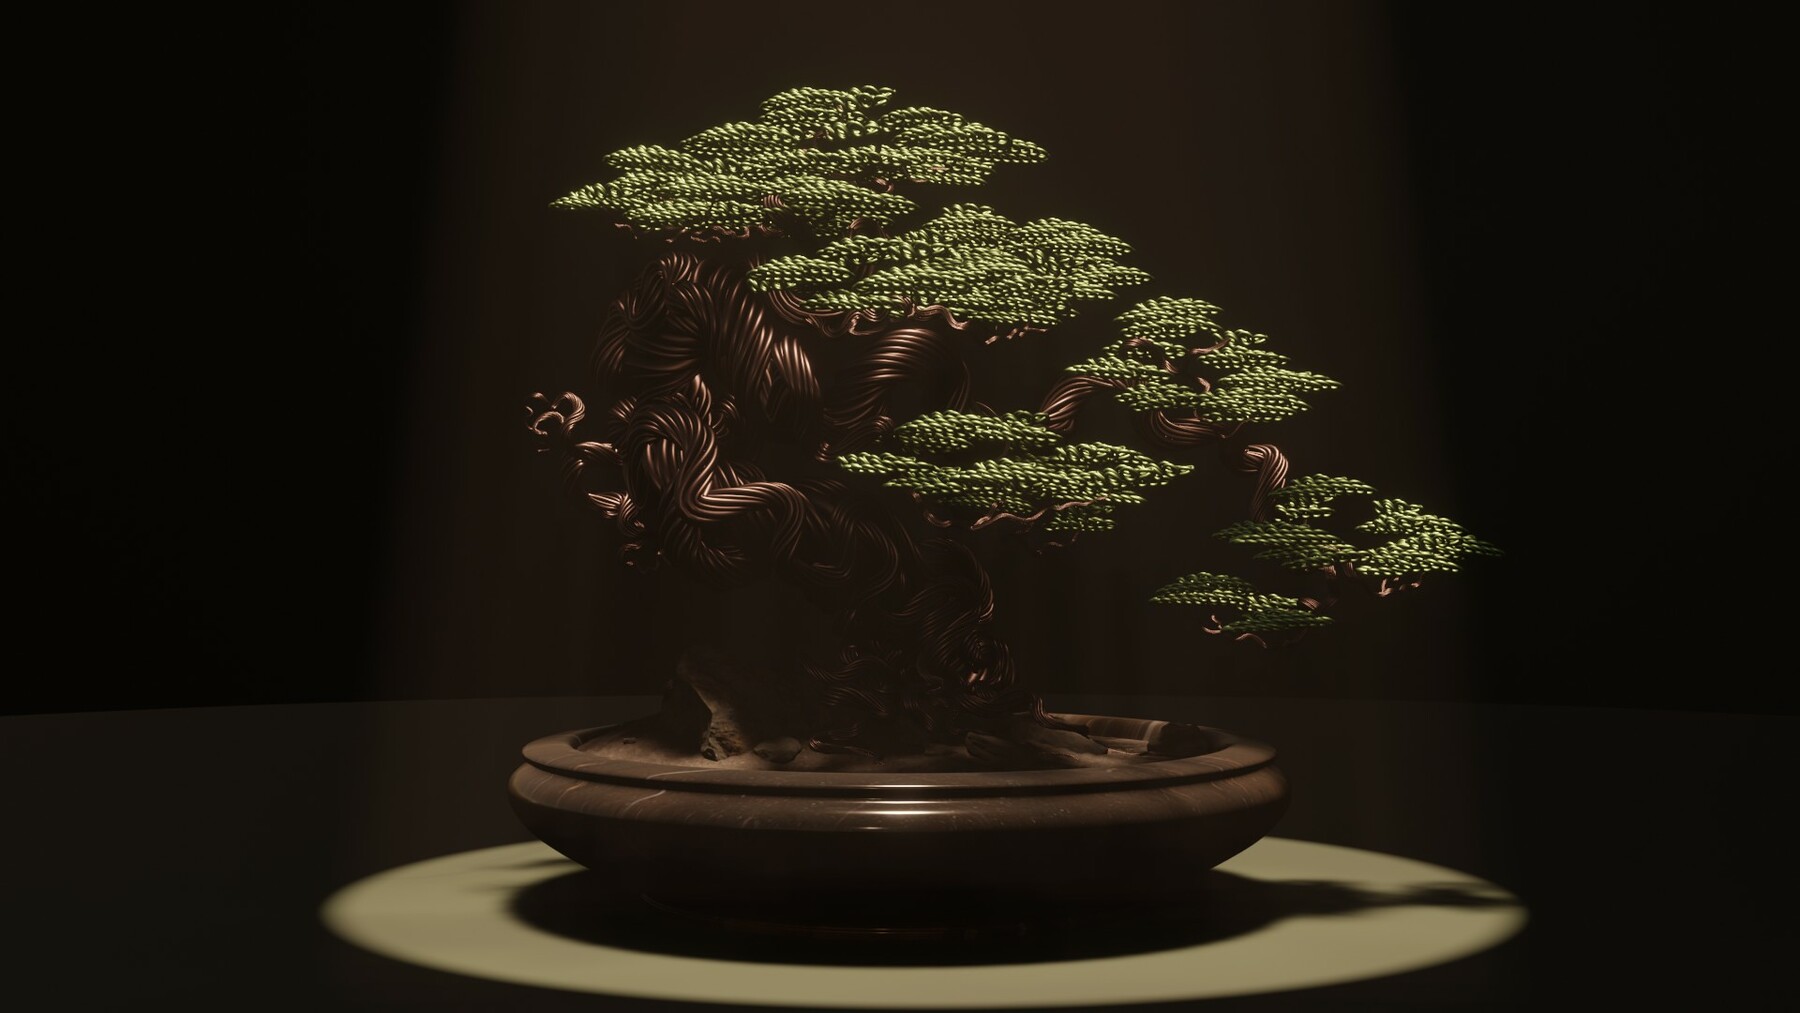 ArtStation - Bonsai tree copper wire | Resources